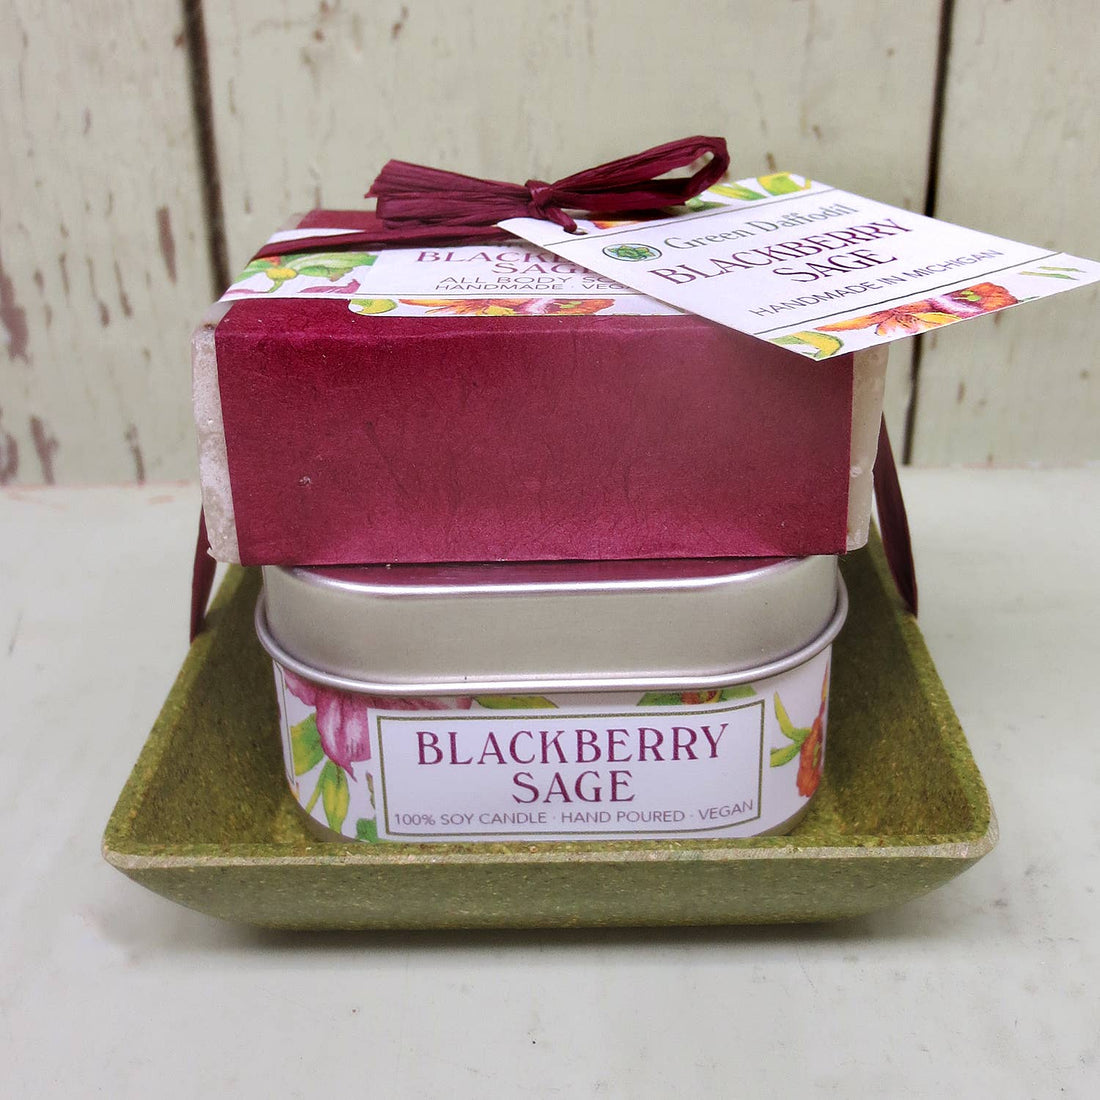 Blackberry Sage Candle & Soap Dish Kit - Gift Set